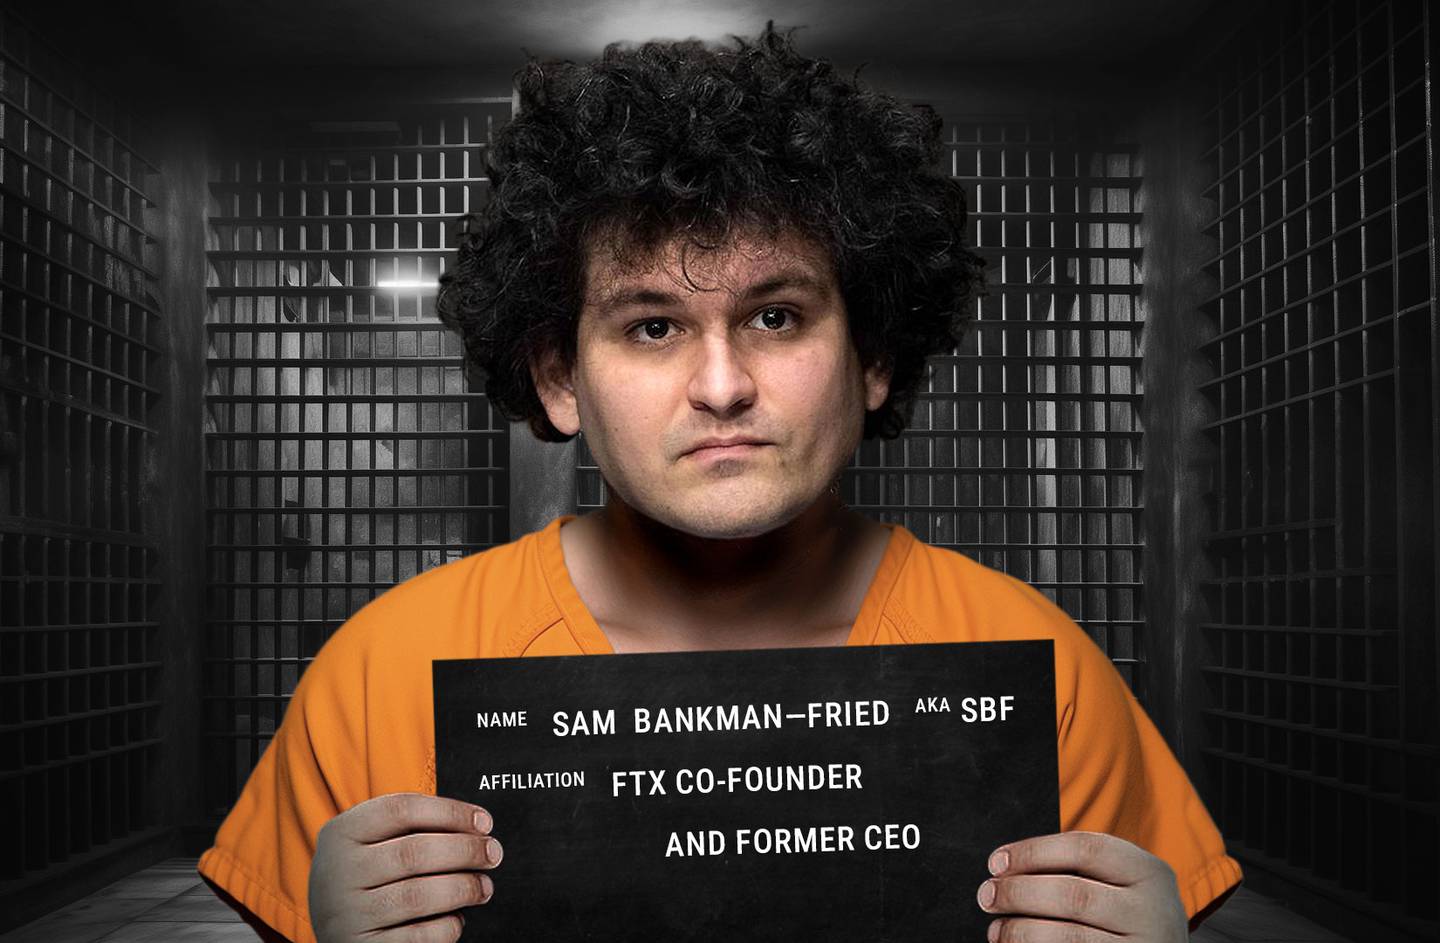 An illustration of Sam Bankman-Fried dressed as a prisoner with a jail background.